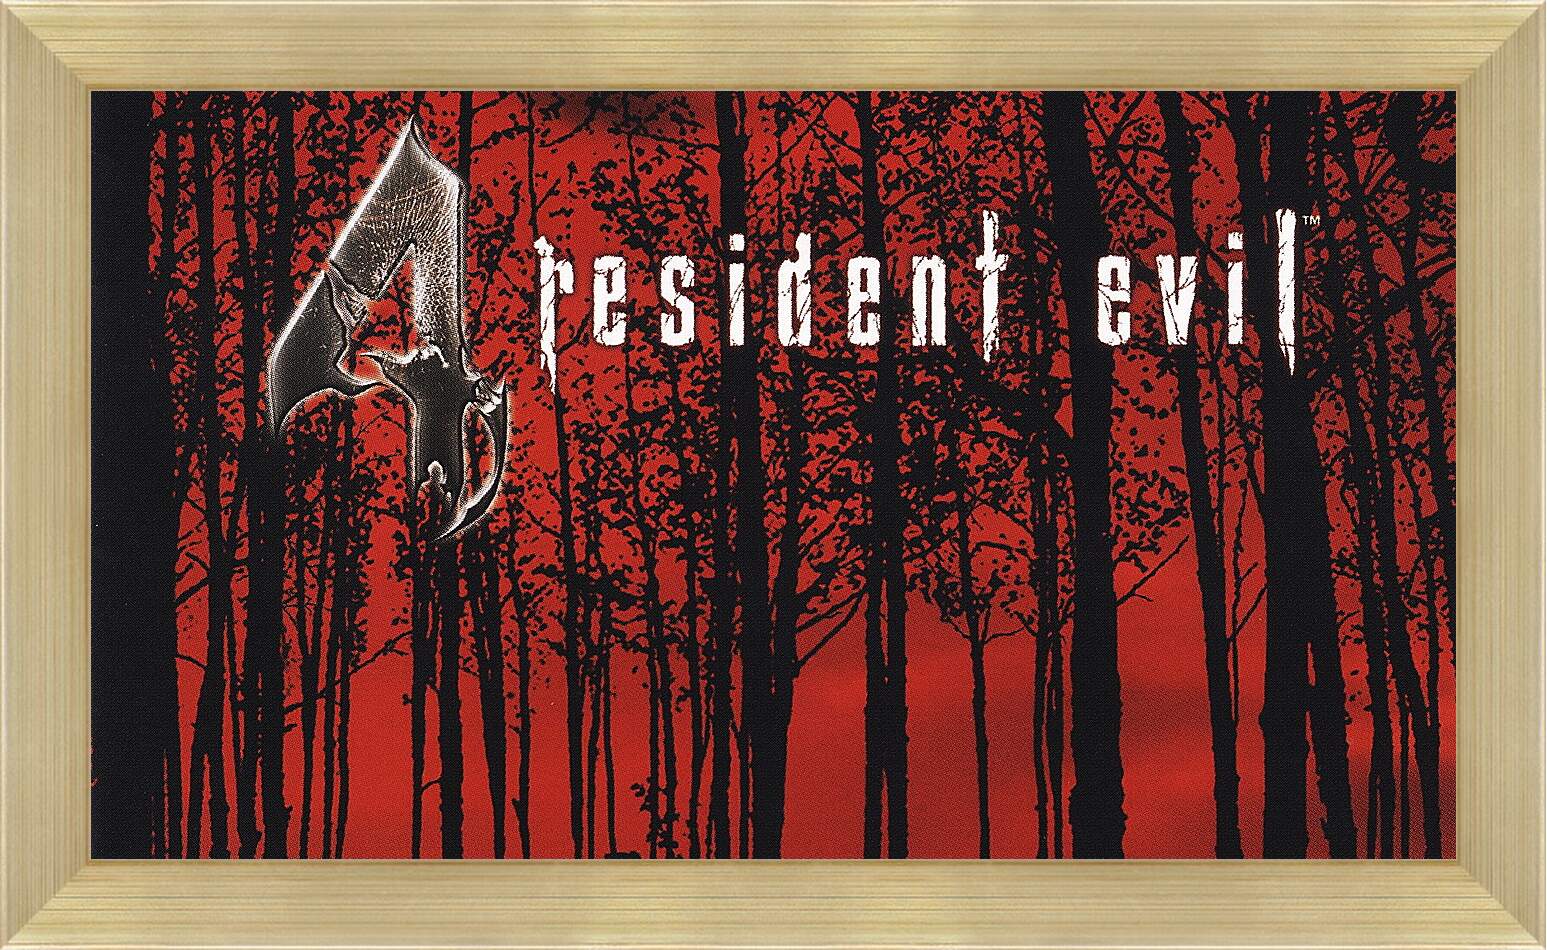 Картина в раме - Resident Evil 4
